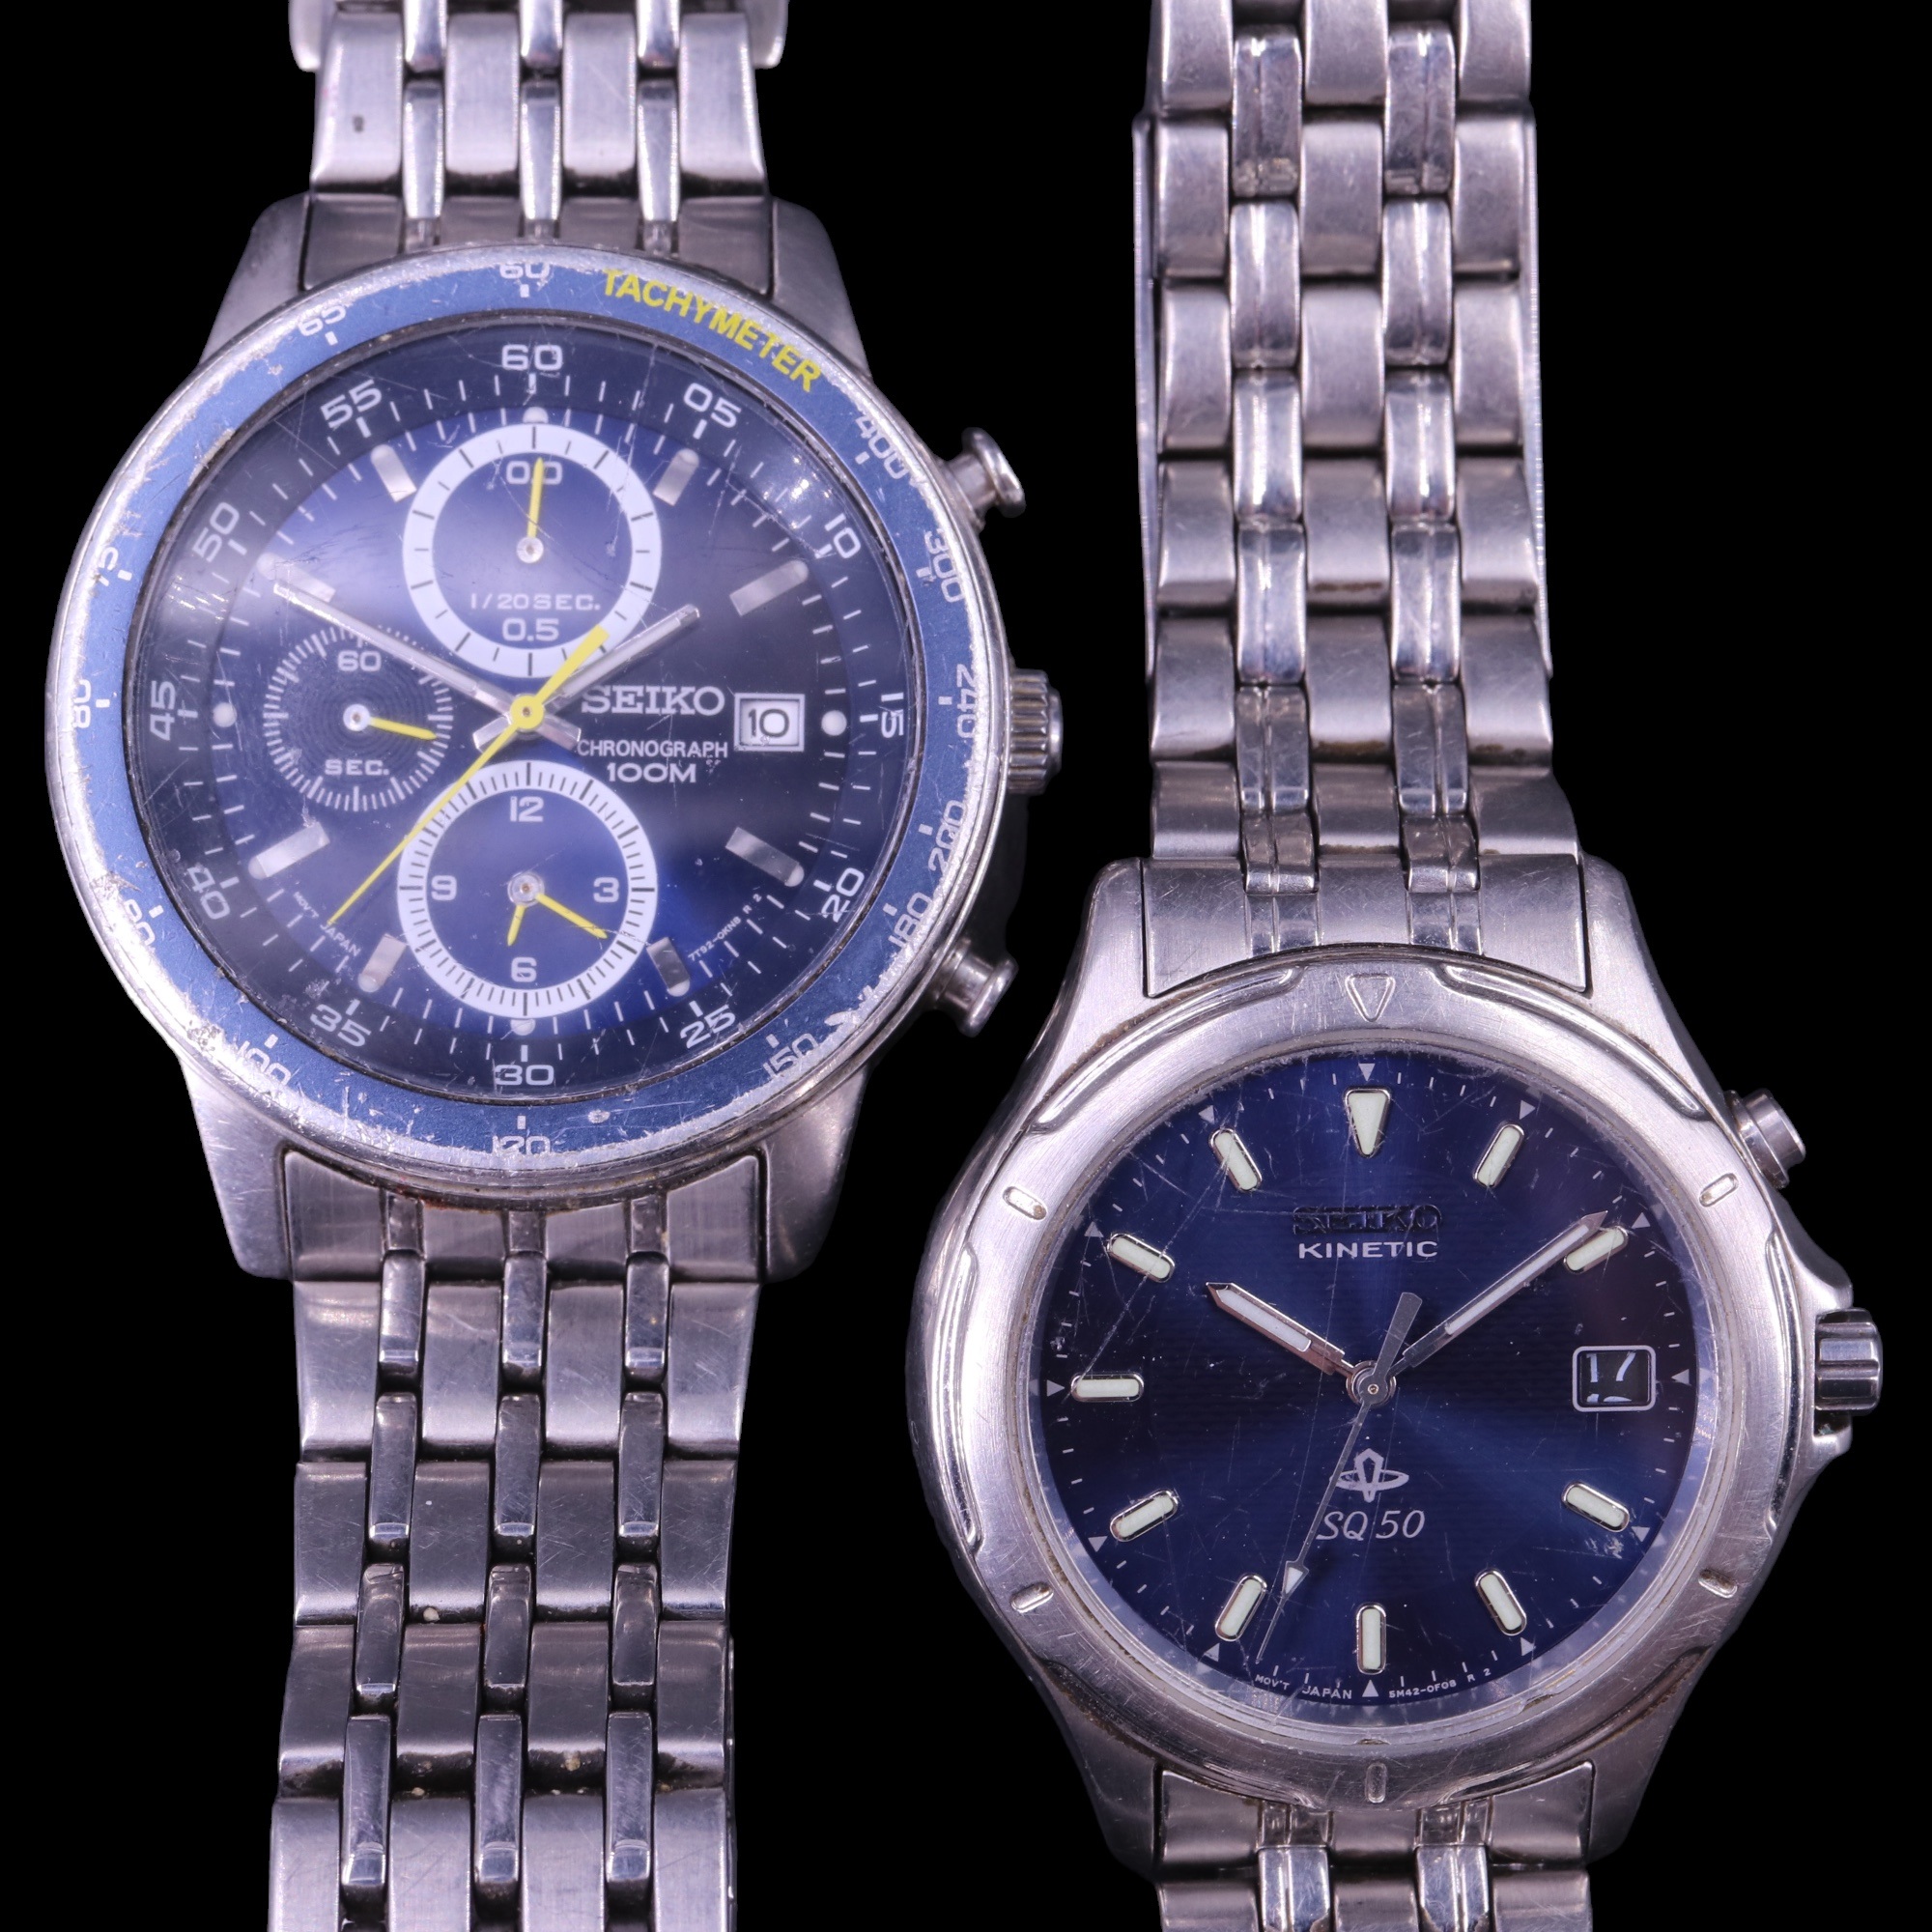 A Seiko quartz chronograph wristwatch, 7T92-OKN8 R 2, together with A Seiko Kinetic SQ50, 5M42-